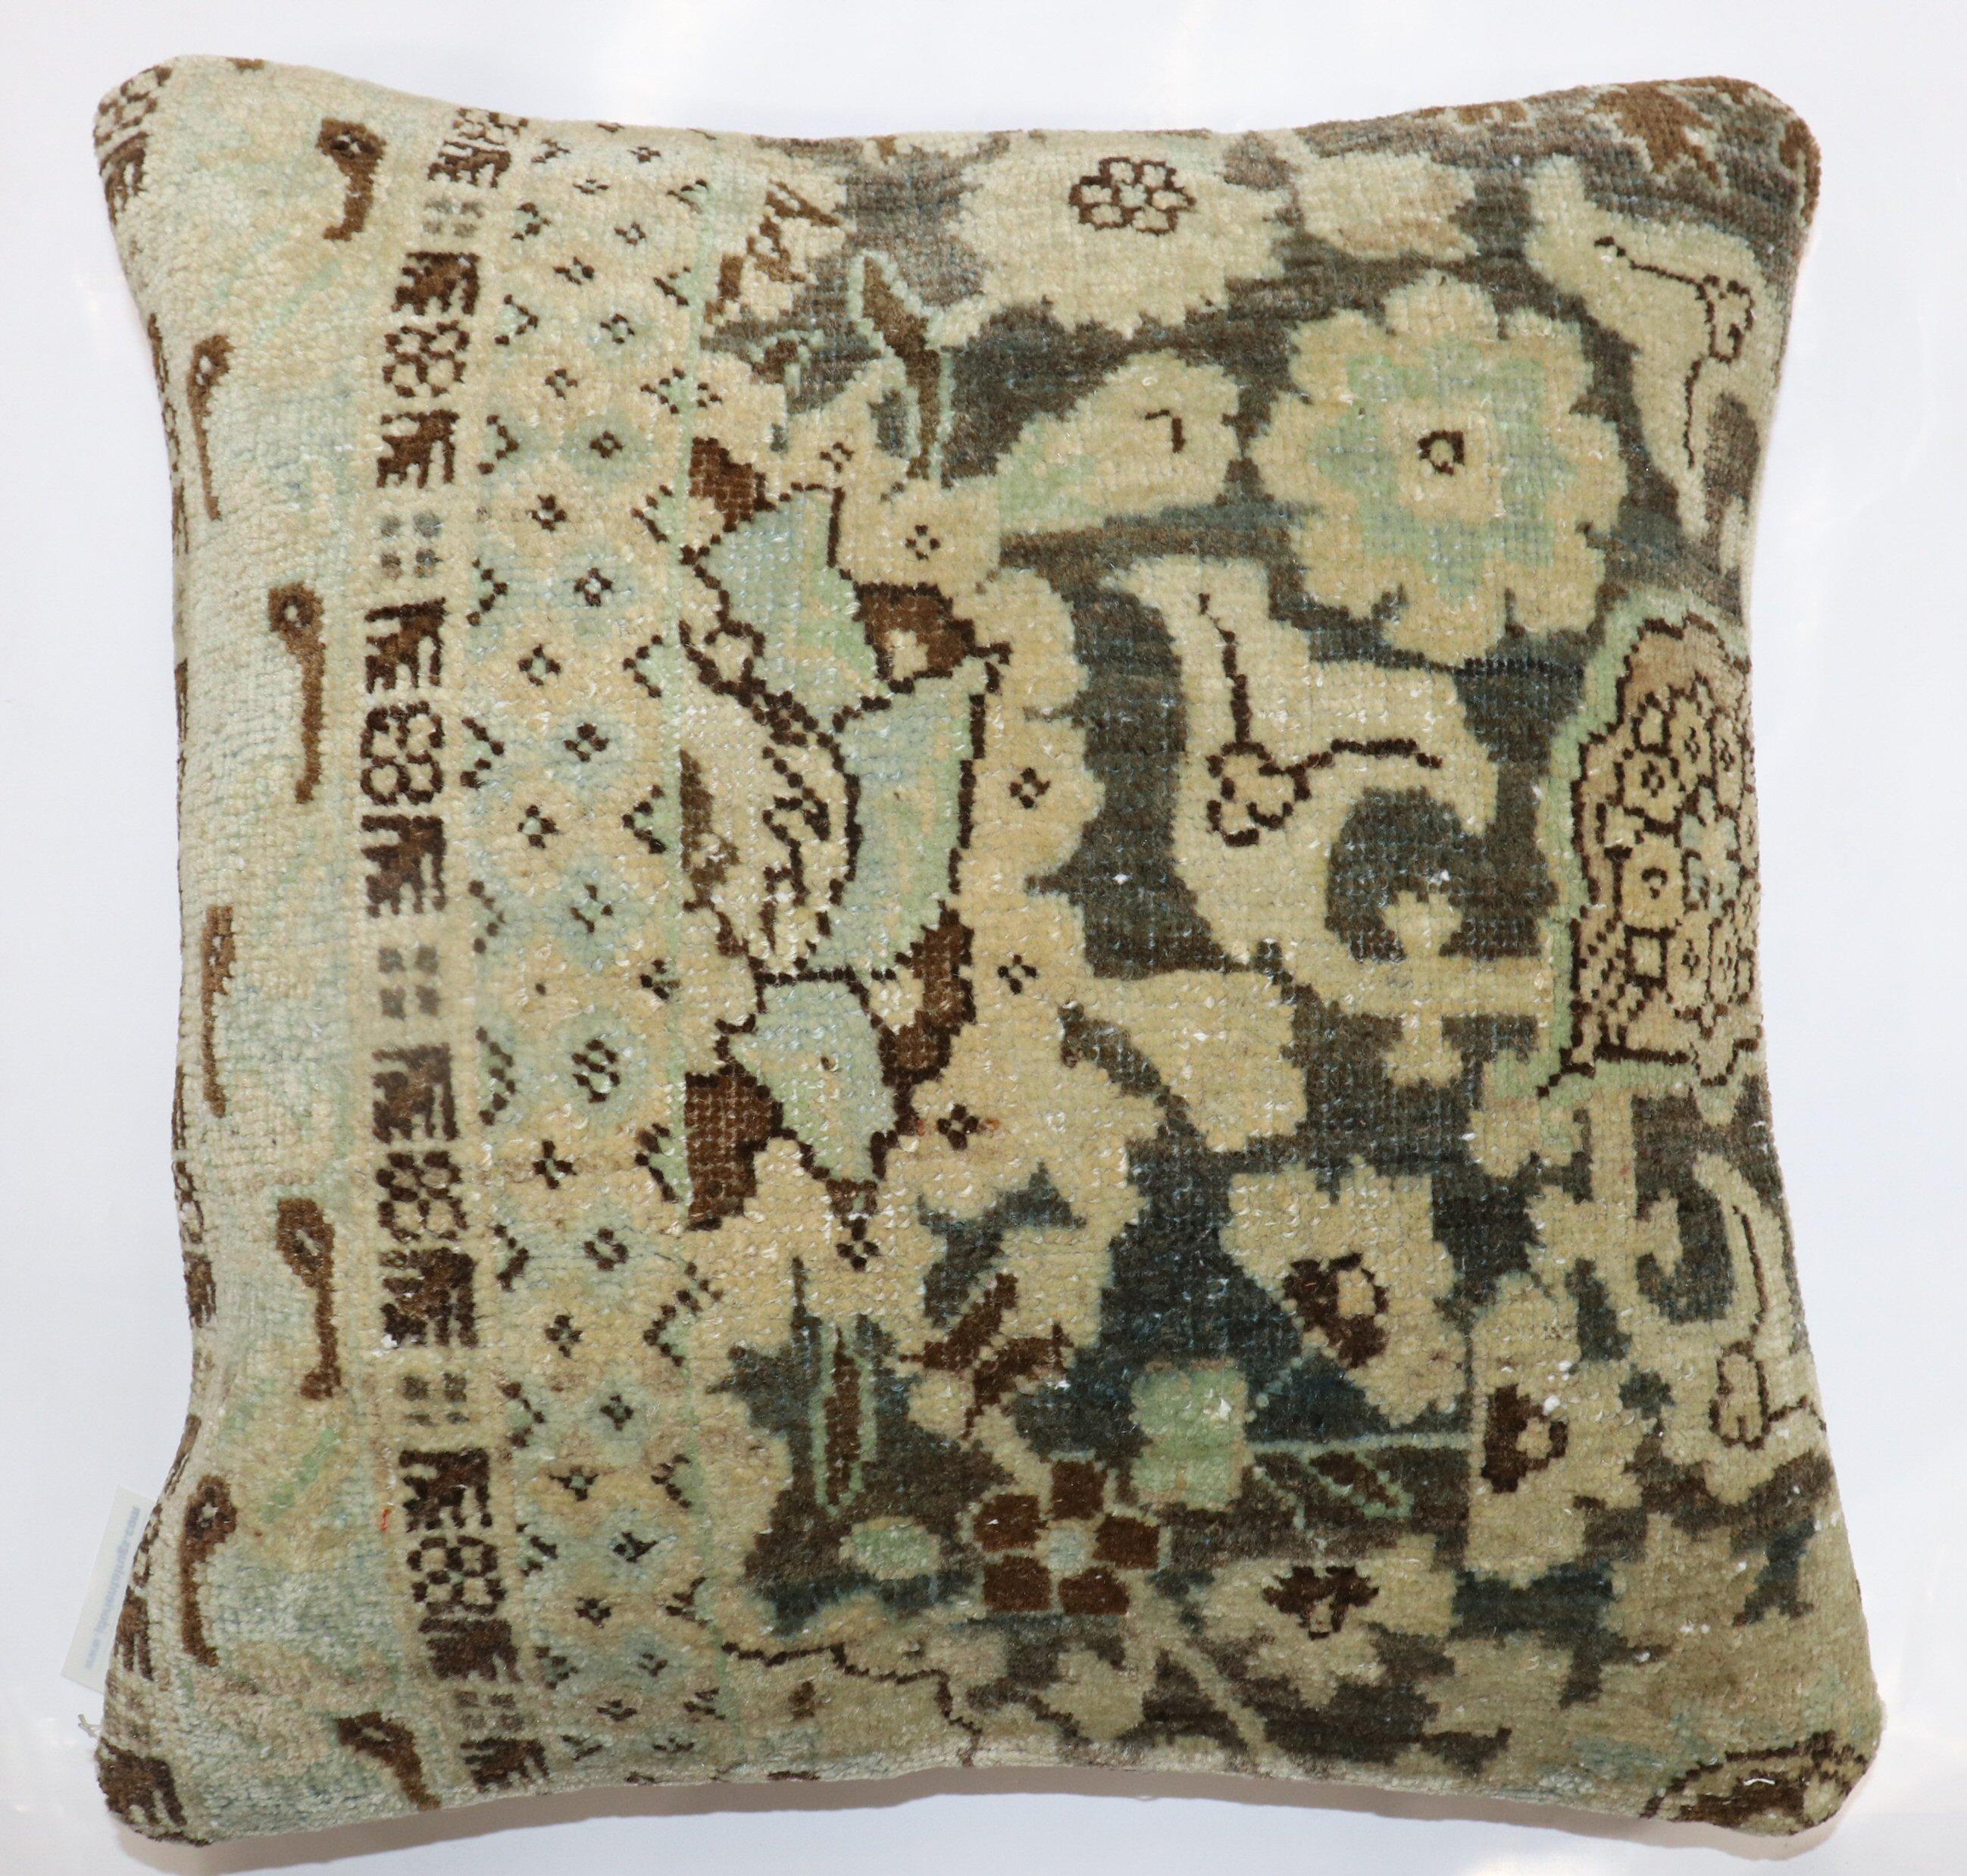 Medium size pillow made from a Persian Bidjar rug. zipper closure and poly-fill insert provided.

Measures: 17'' x 18''.